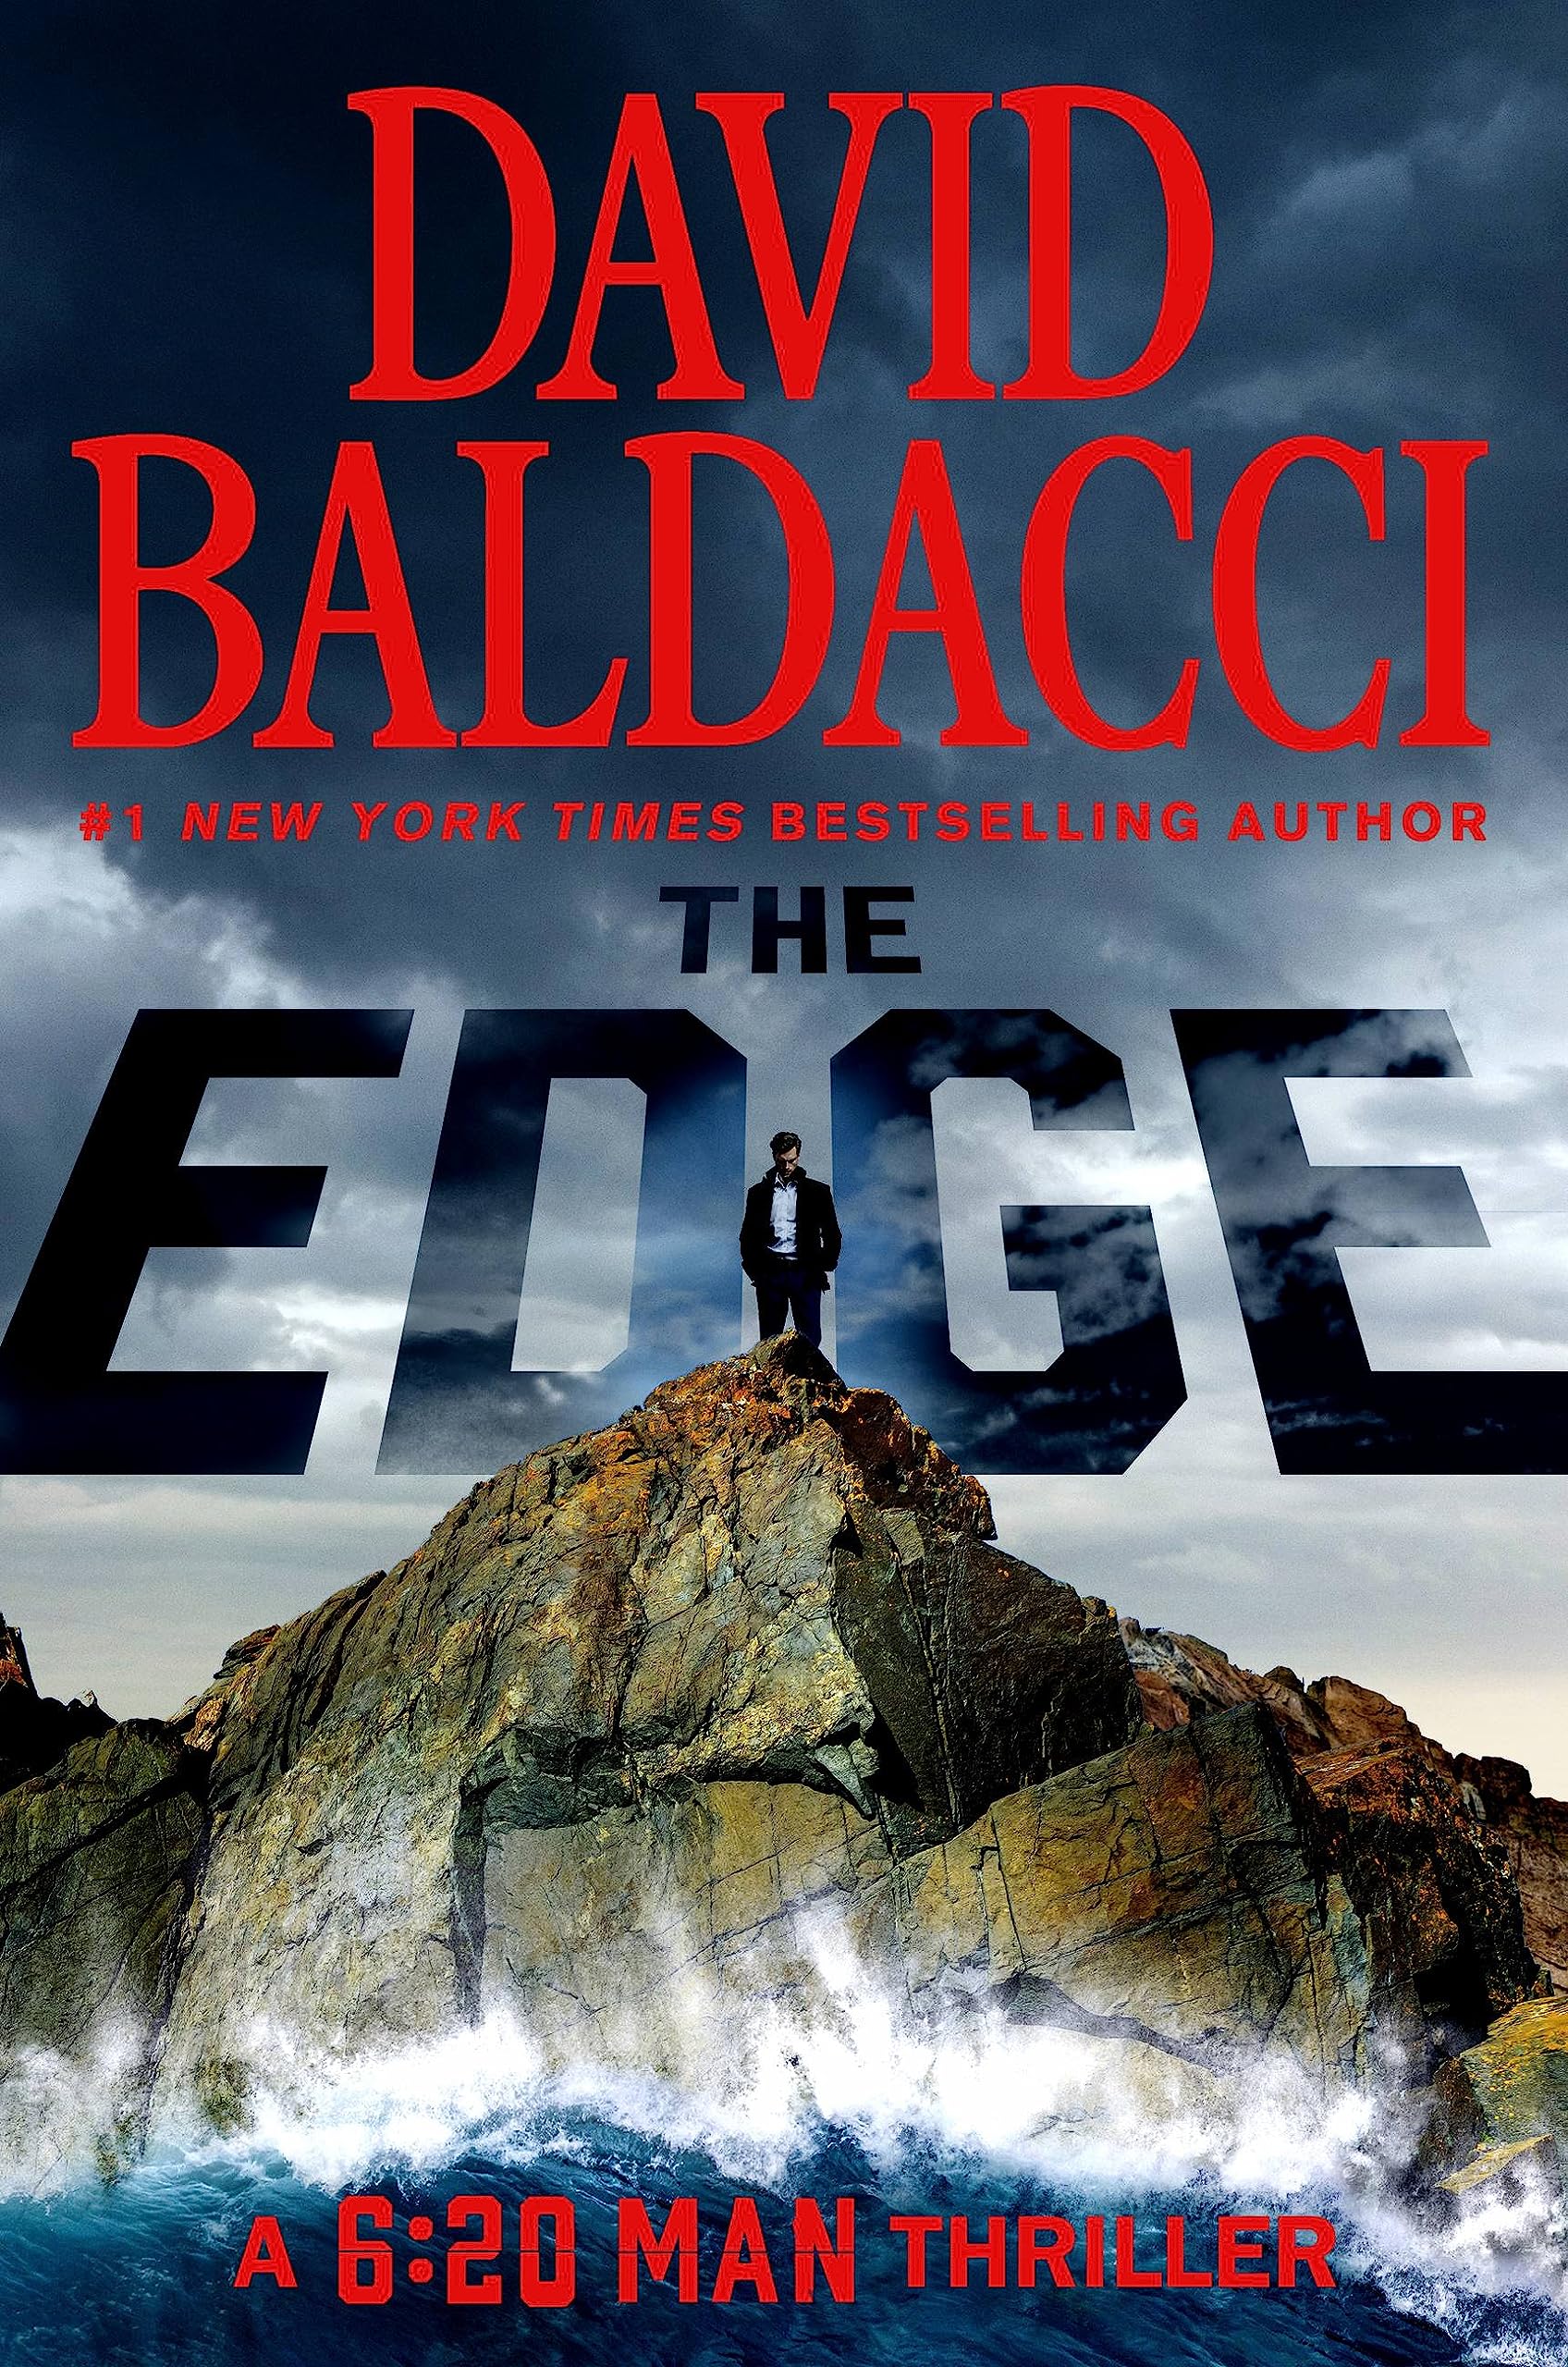 The Edge by Baldacci, David